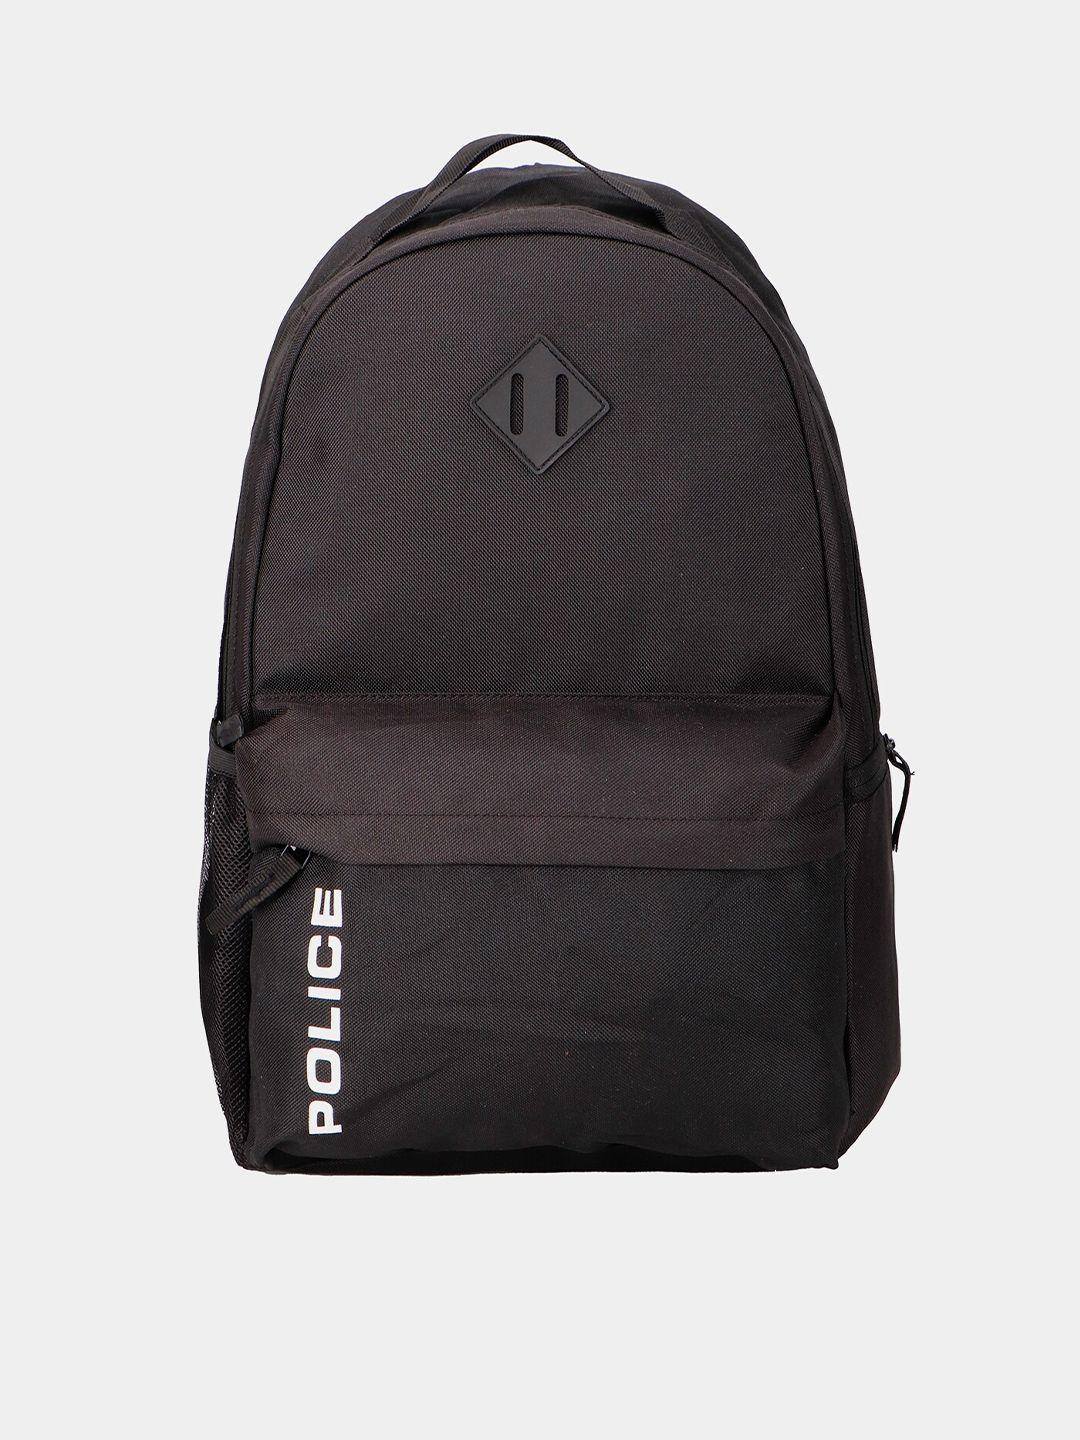 police men brand logo printed upto 14 inch ergonomic backpack